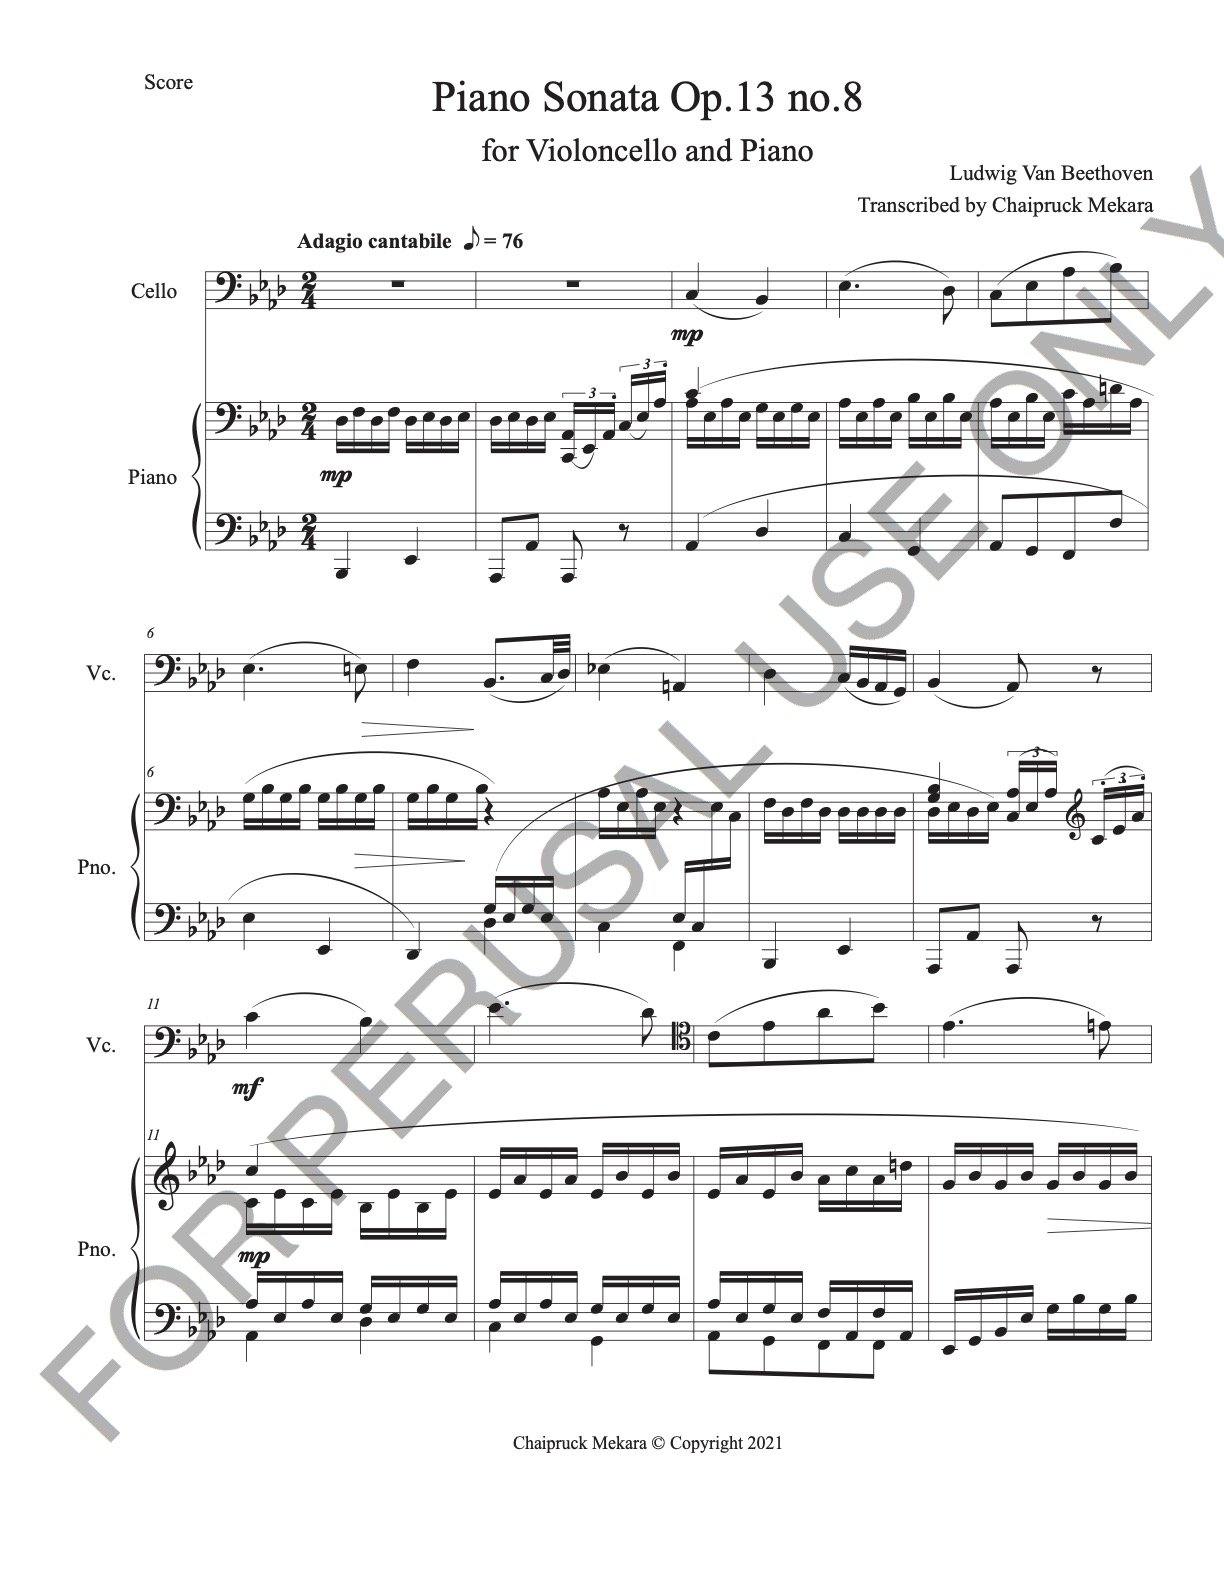 Audio Mp3 Piano part for Beethoven Piano Sonata Op. 13 no.8 - ChaipruckMekara